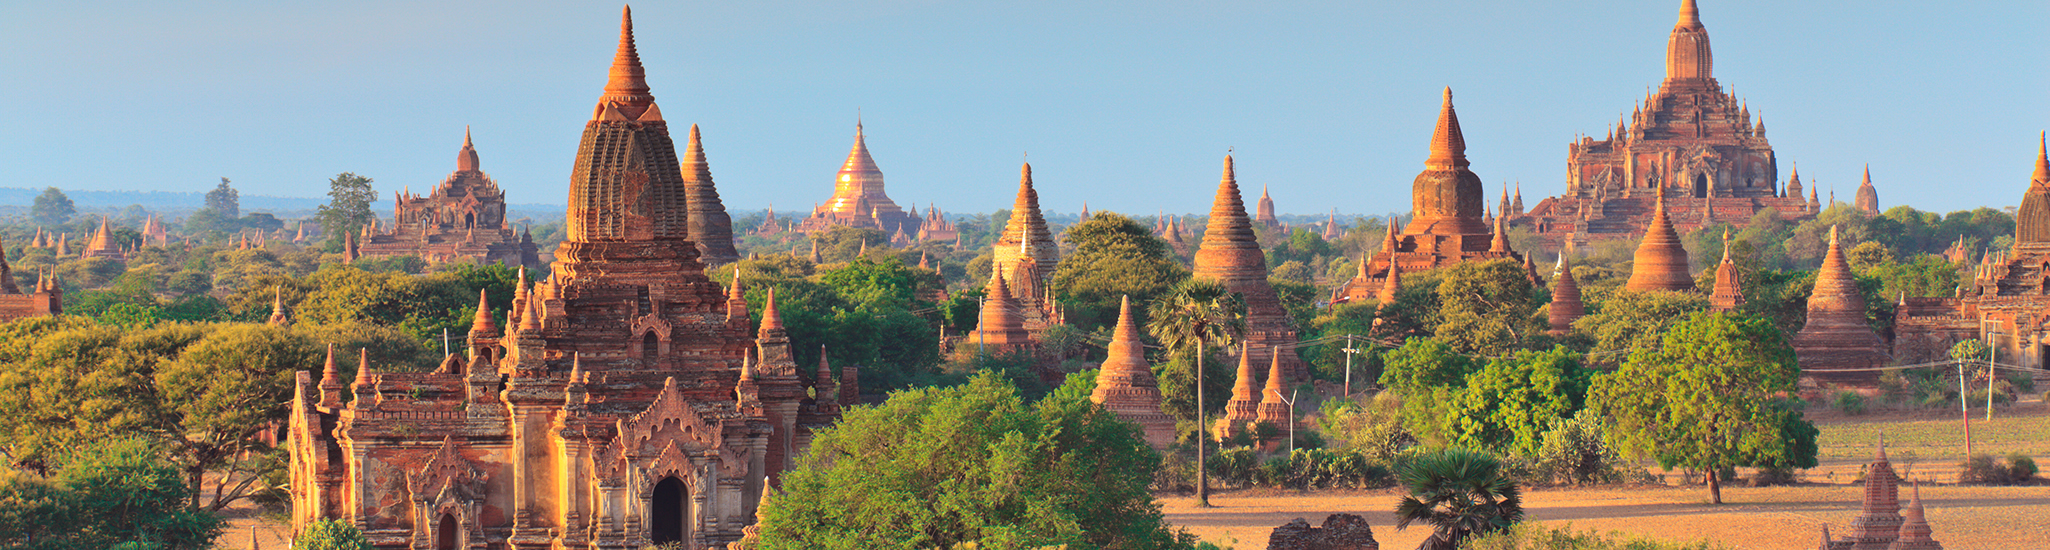 The Temples of Bagan - Myanmar © Cruiseco